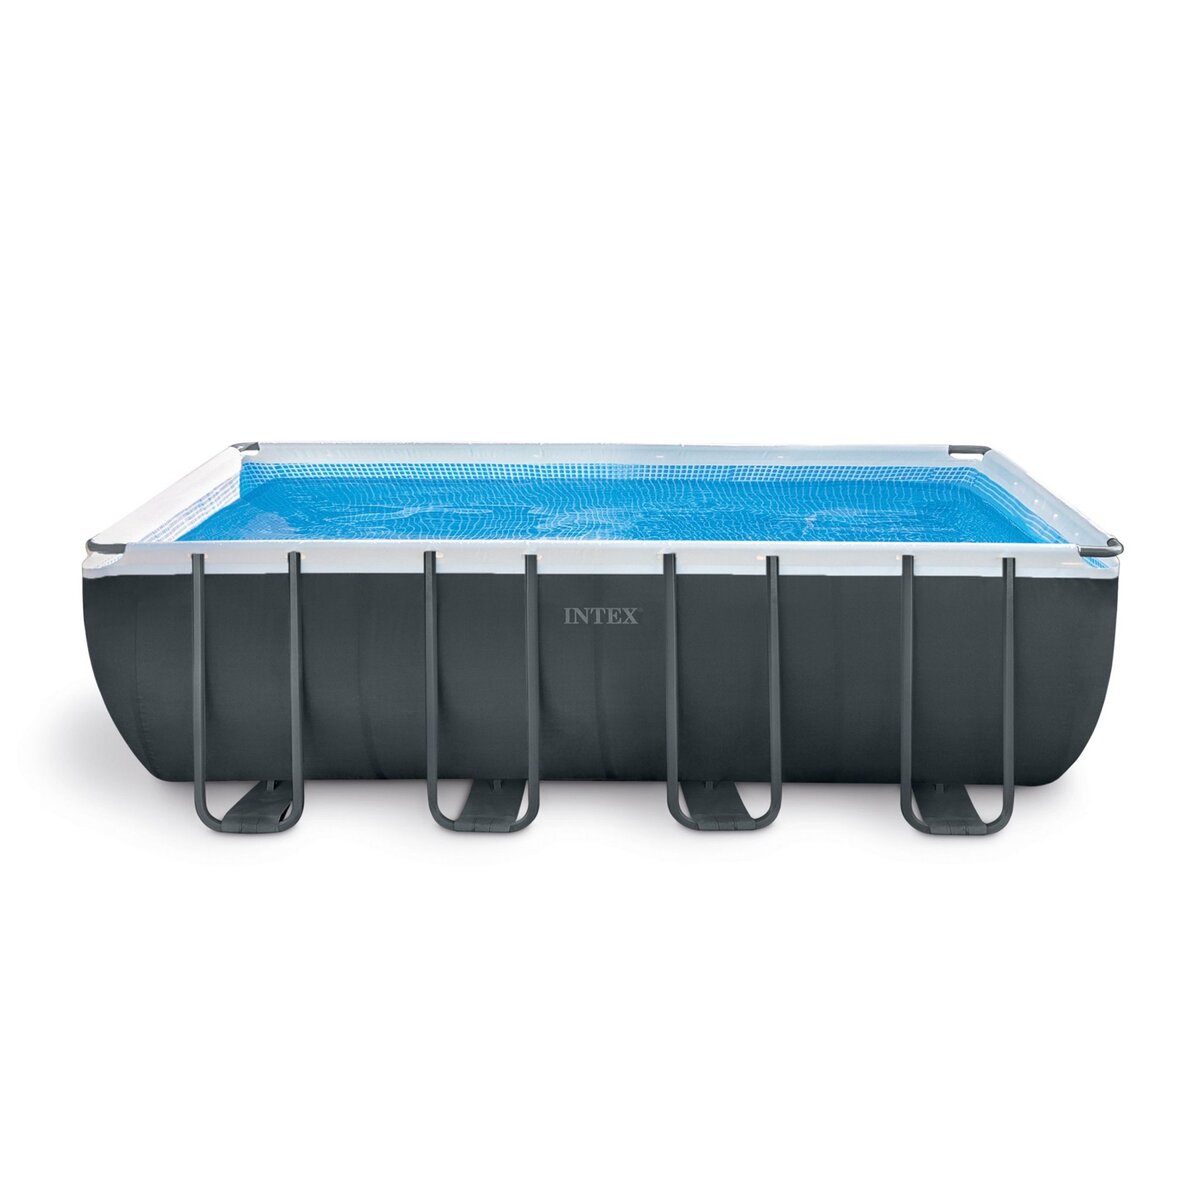 INTEX Kit piscine tubulaire rectangulaire Ultra Silver - 7,32m x 3,66m x1,32m